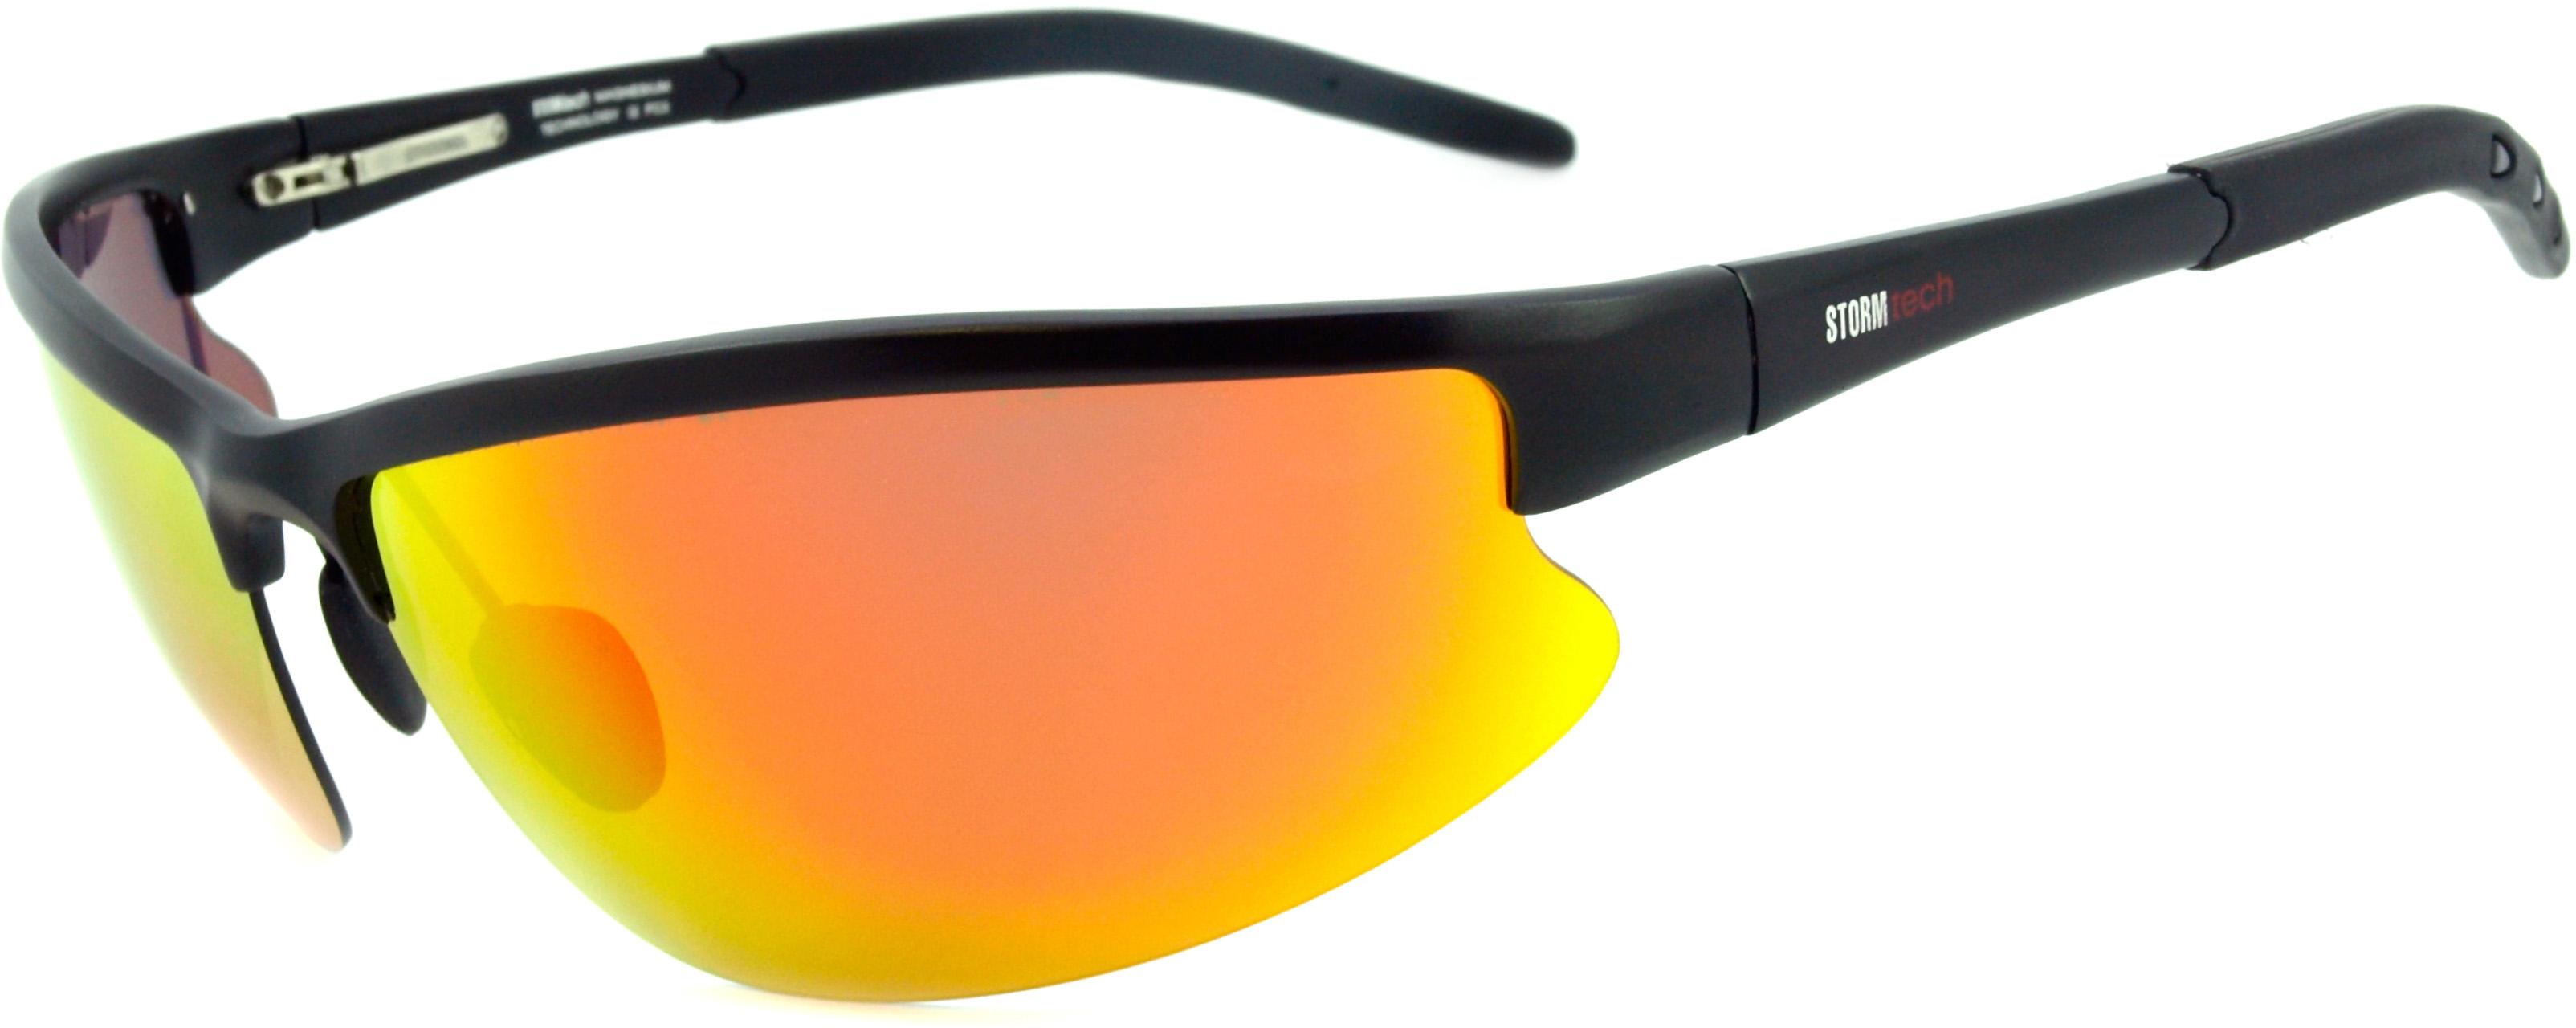 Stormtech Atrax Orange Sunglasses - Black